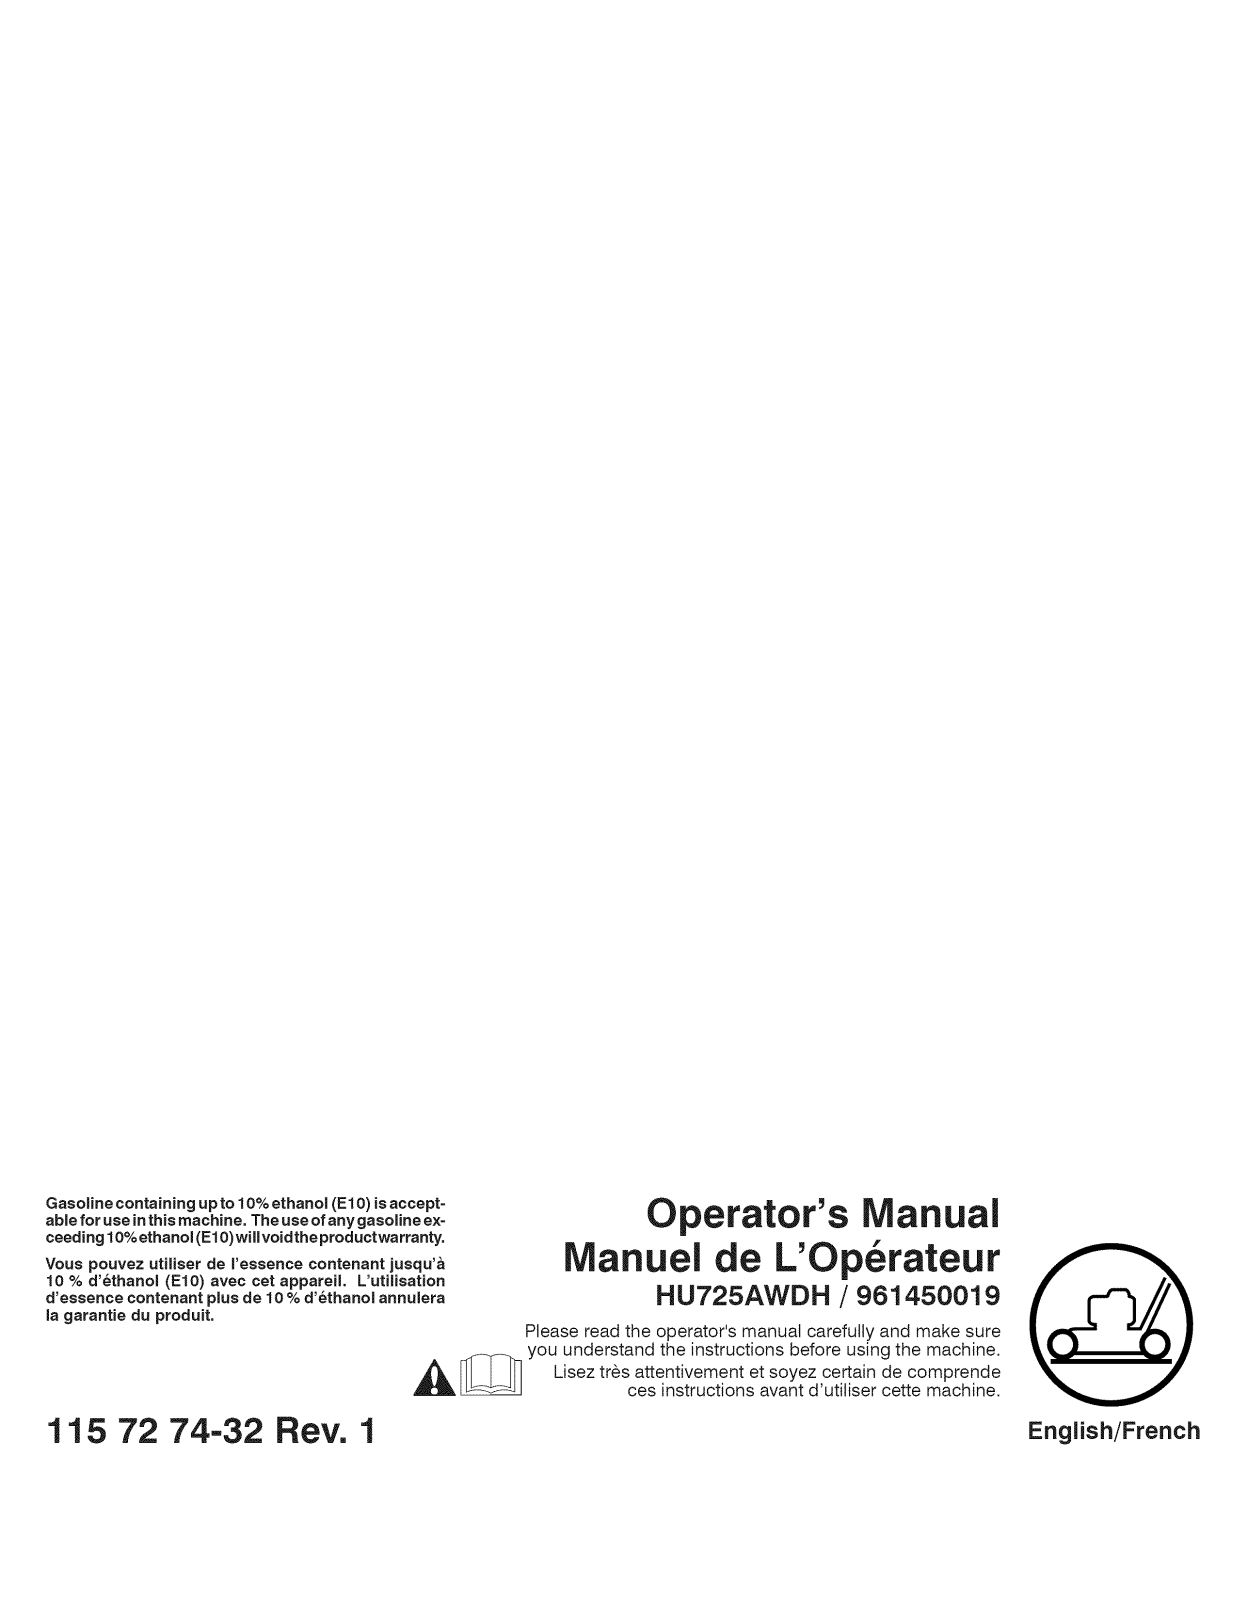 Husqvarna HU725AWDH-96145001901 Owner’s Manual